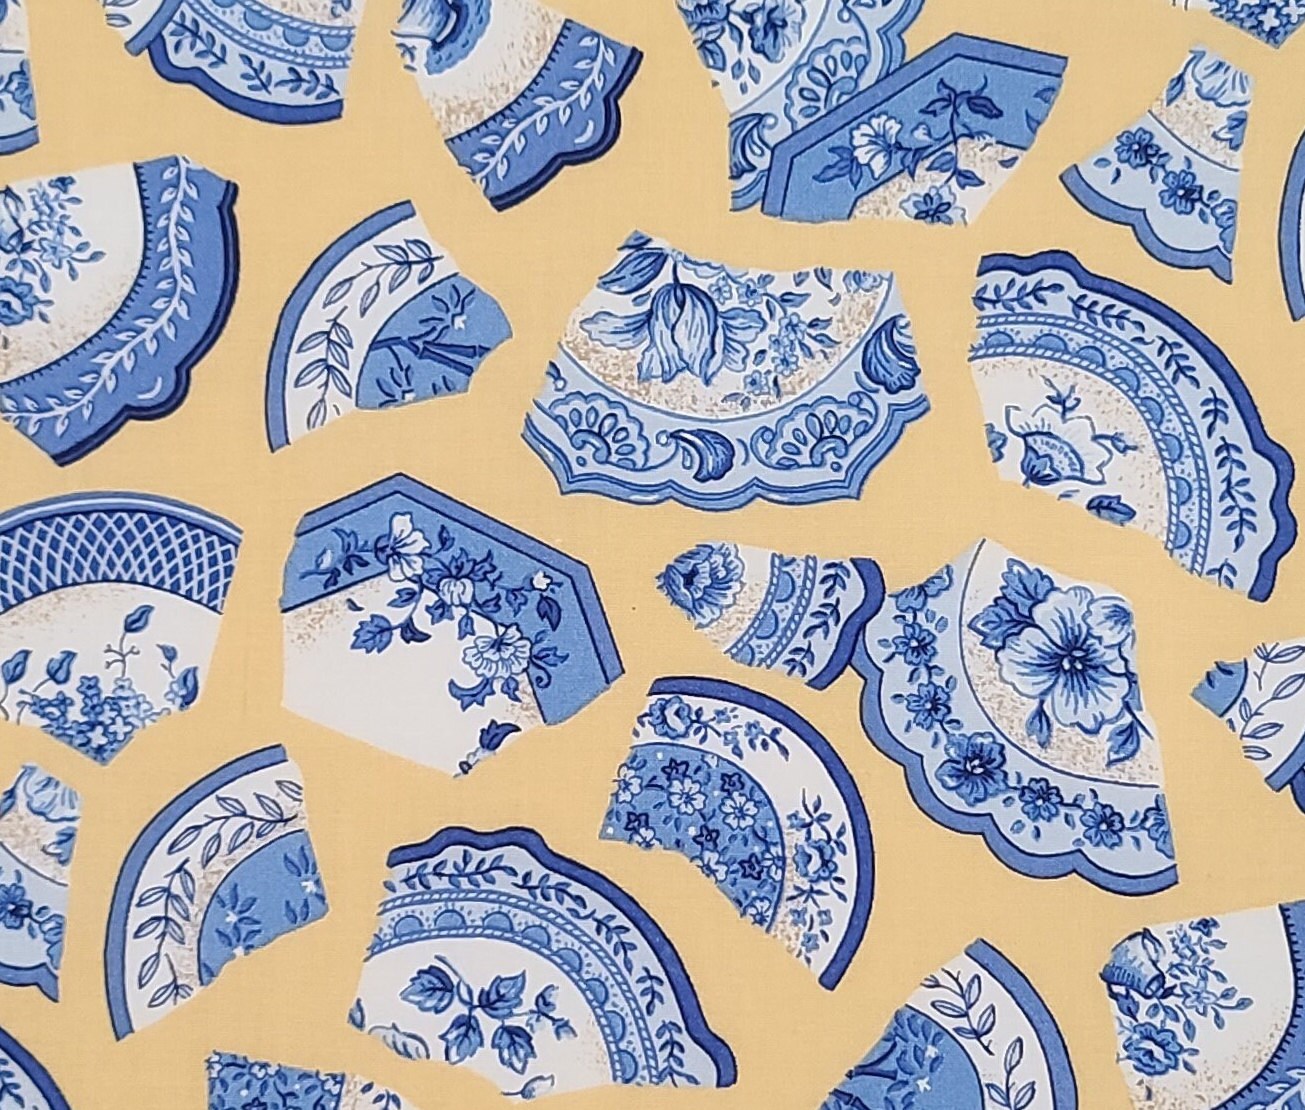 TAF Textiles Art & Film Inc - Light Gold Fabric / Blue and White "Delft" Pattern Broken Plate Print